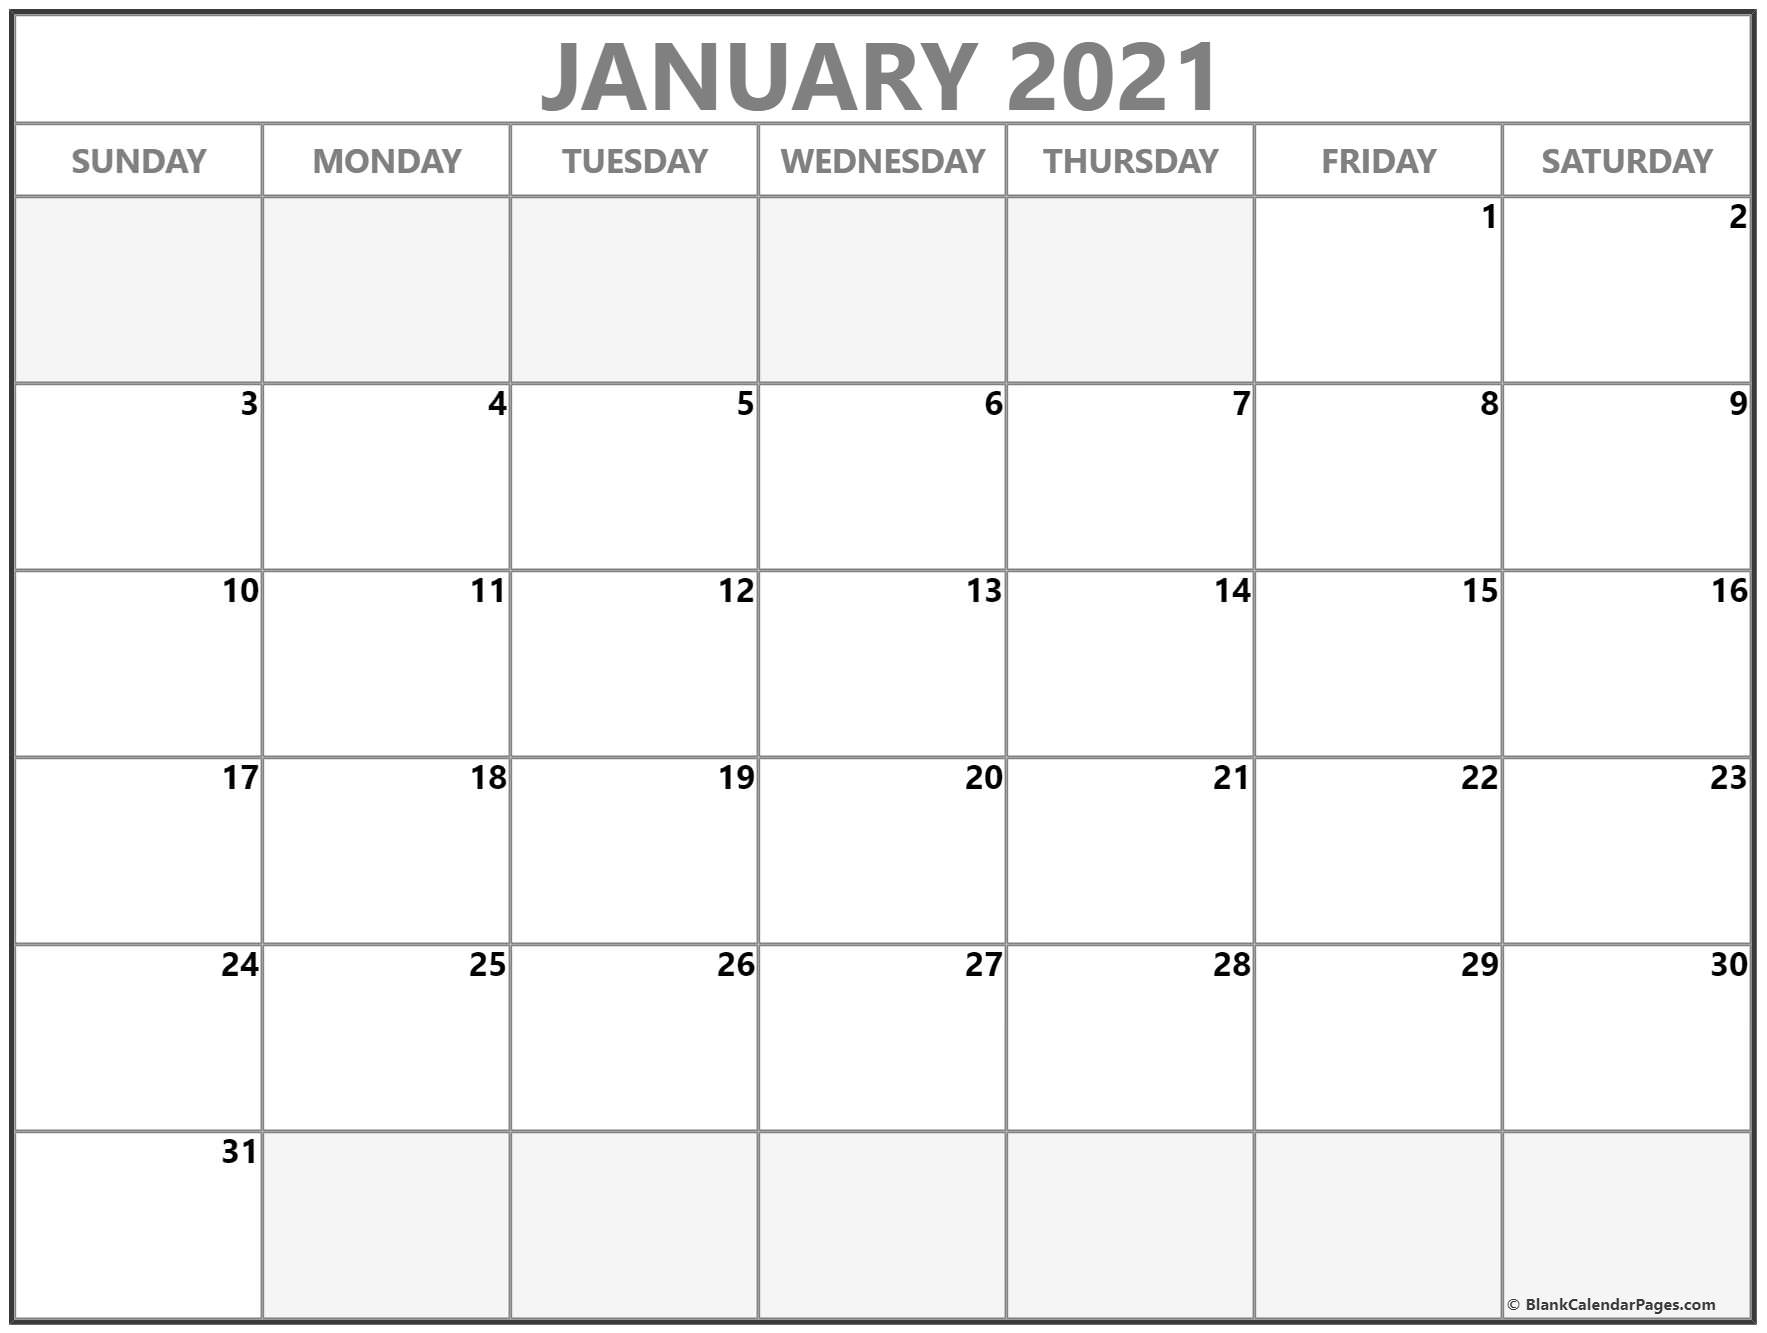 January 2021 Calendar | Free Printable Calendar Templates December 2020 And January 2021 Calendar Printable